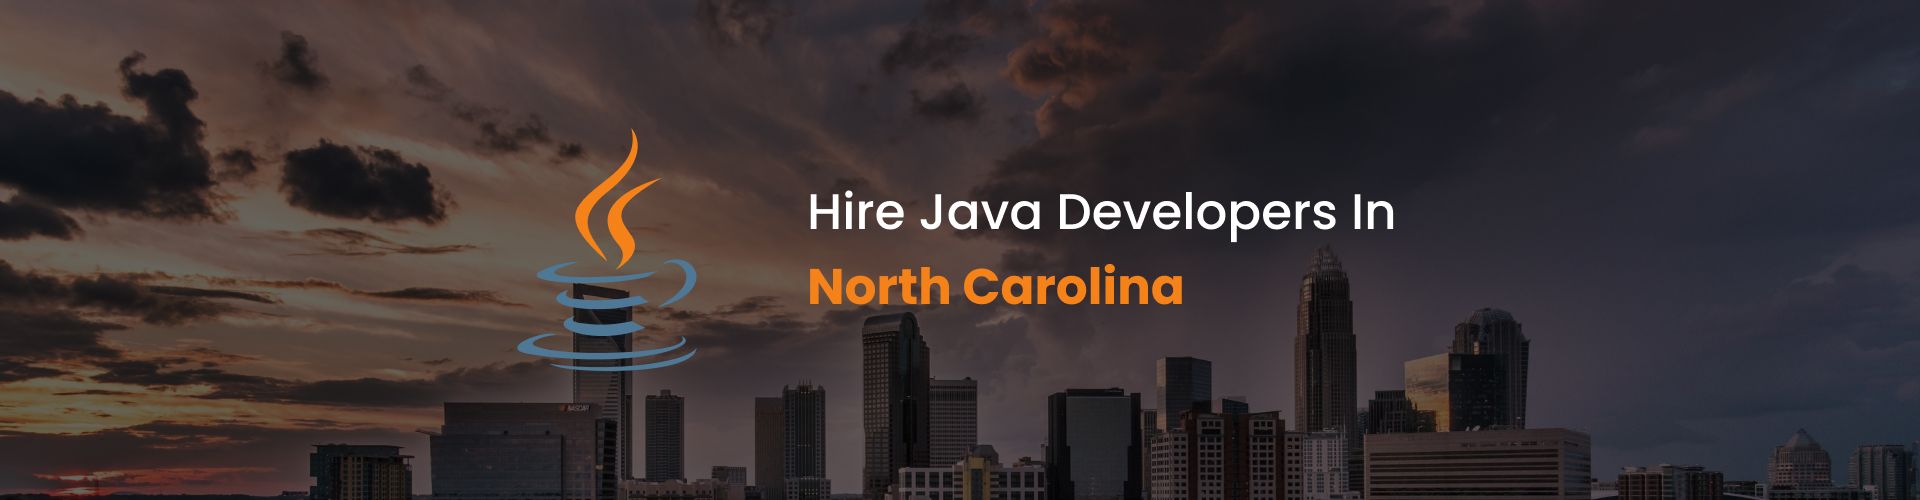 hire java developers in north carolina